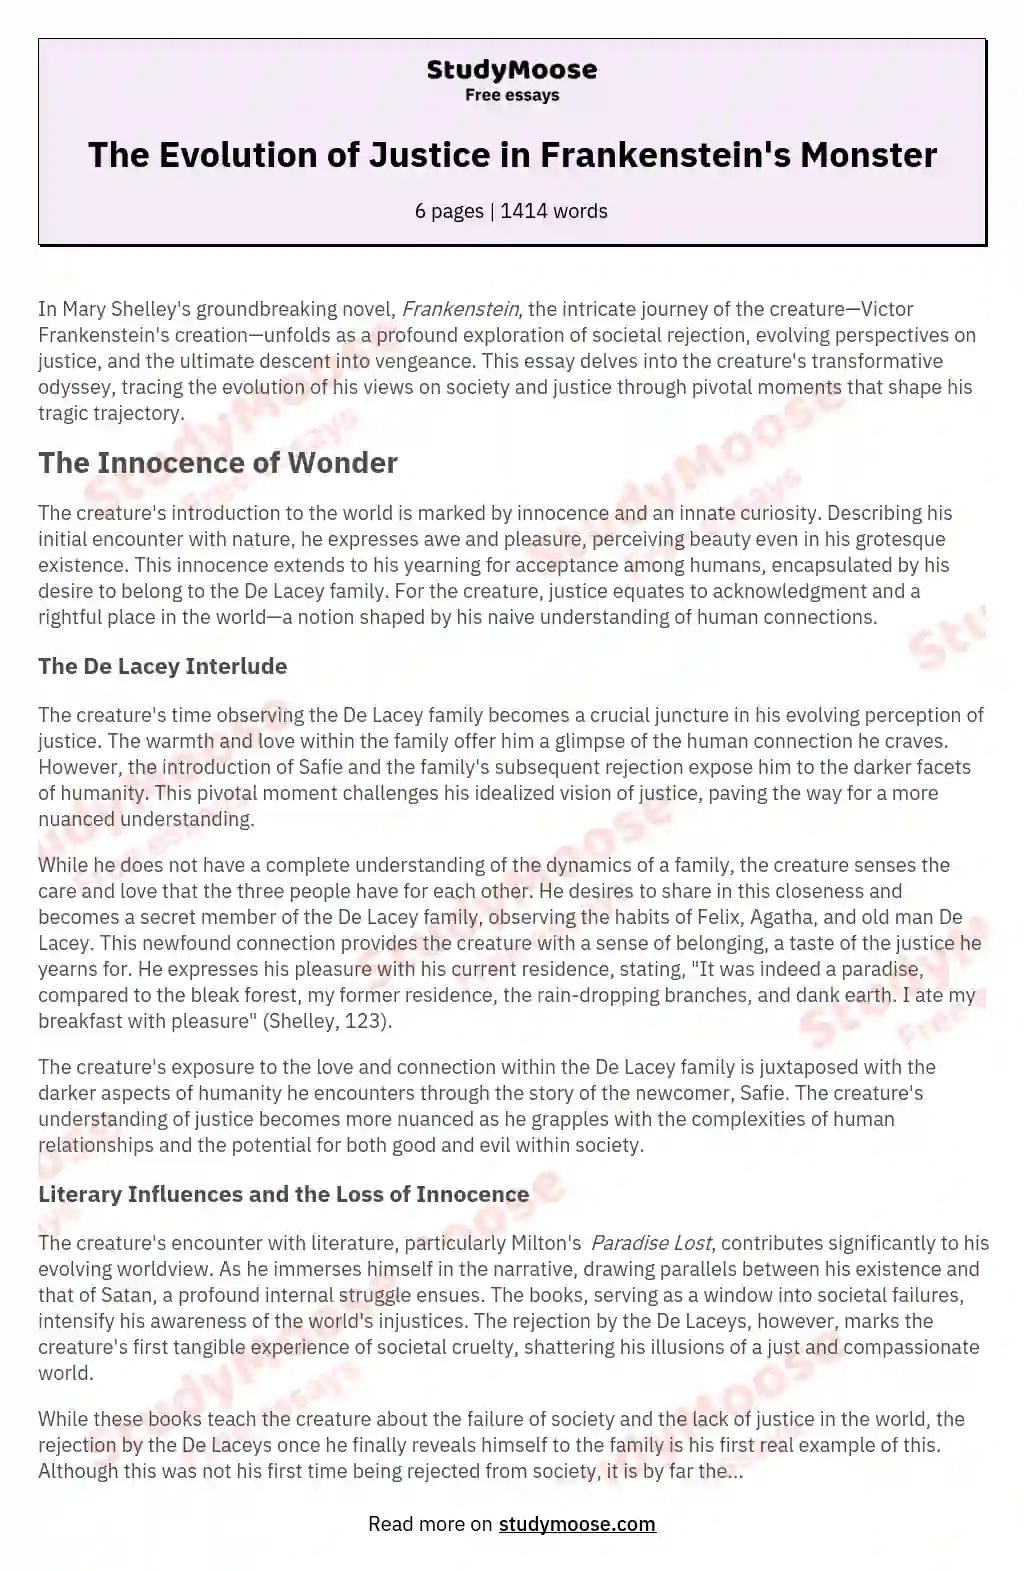 The Evolution of Justice in Frankenstein's Monster essay